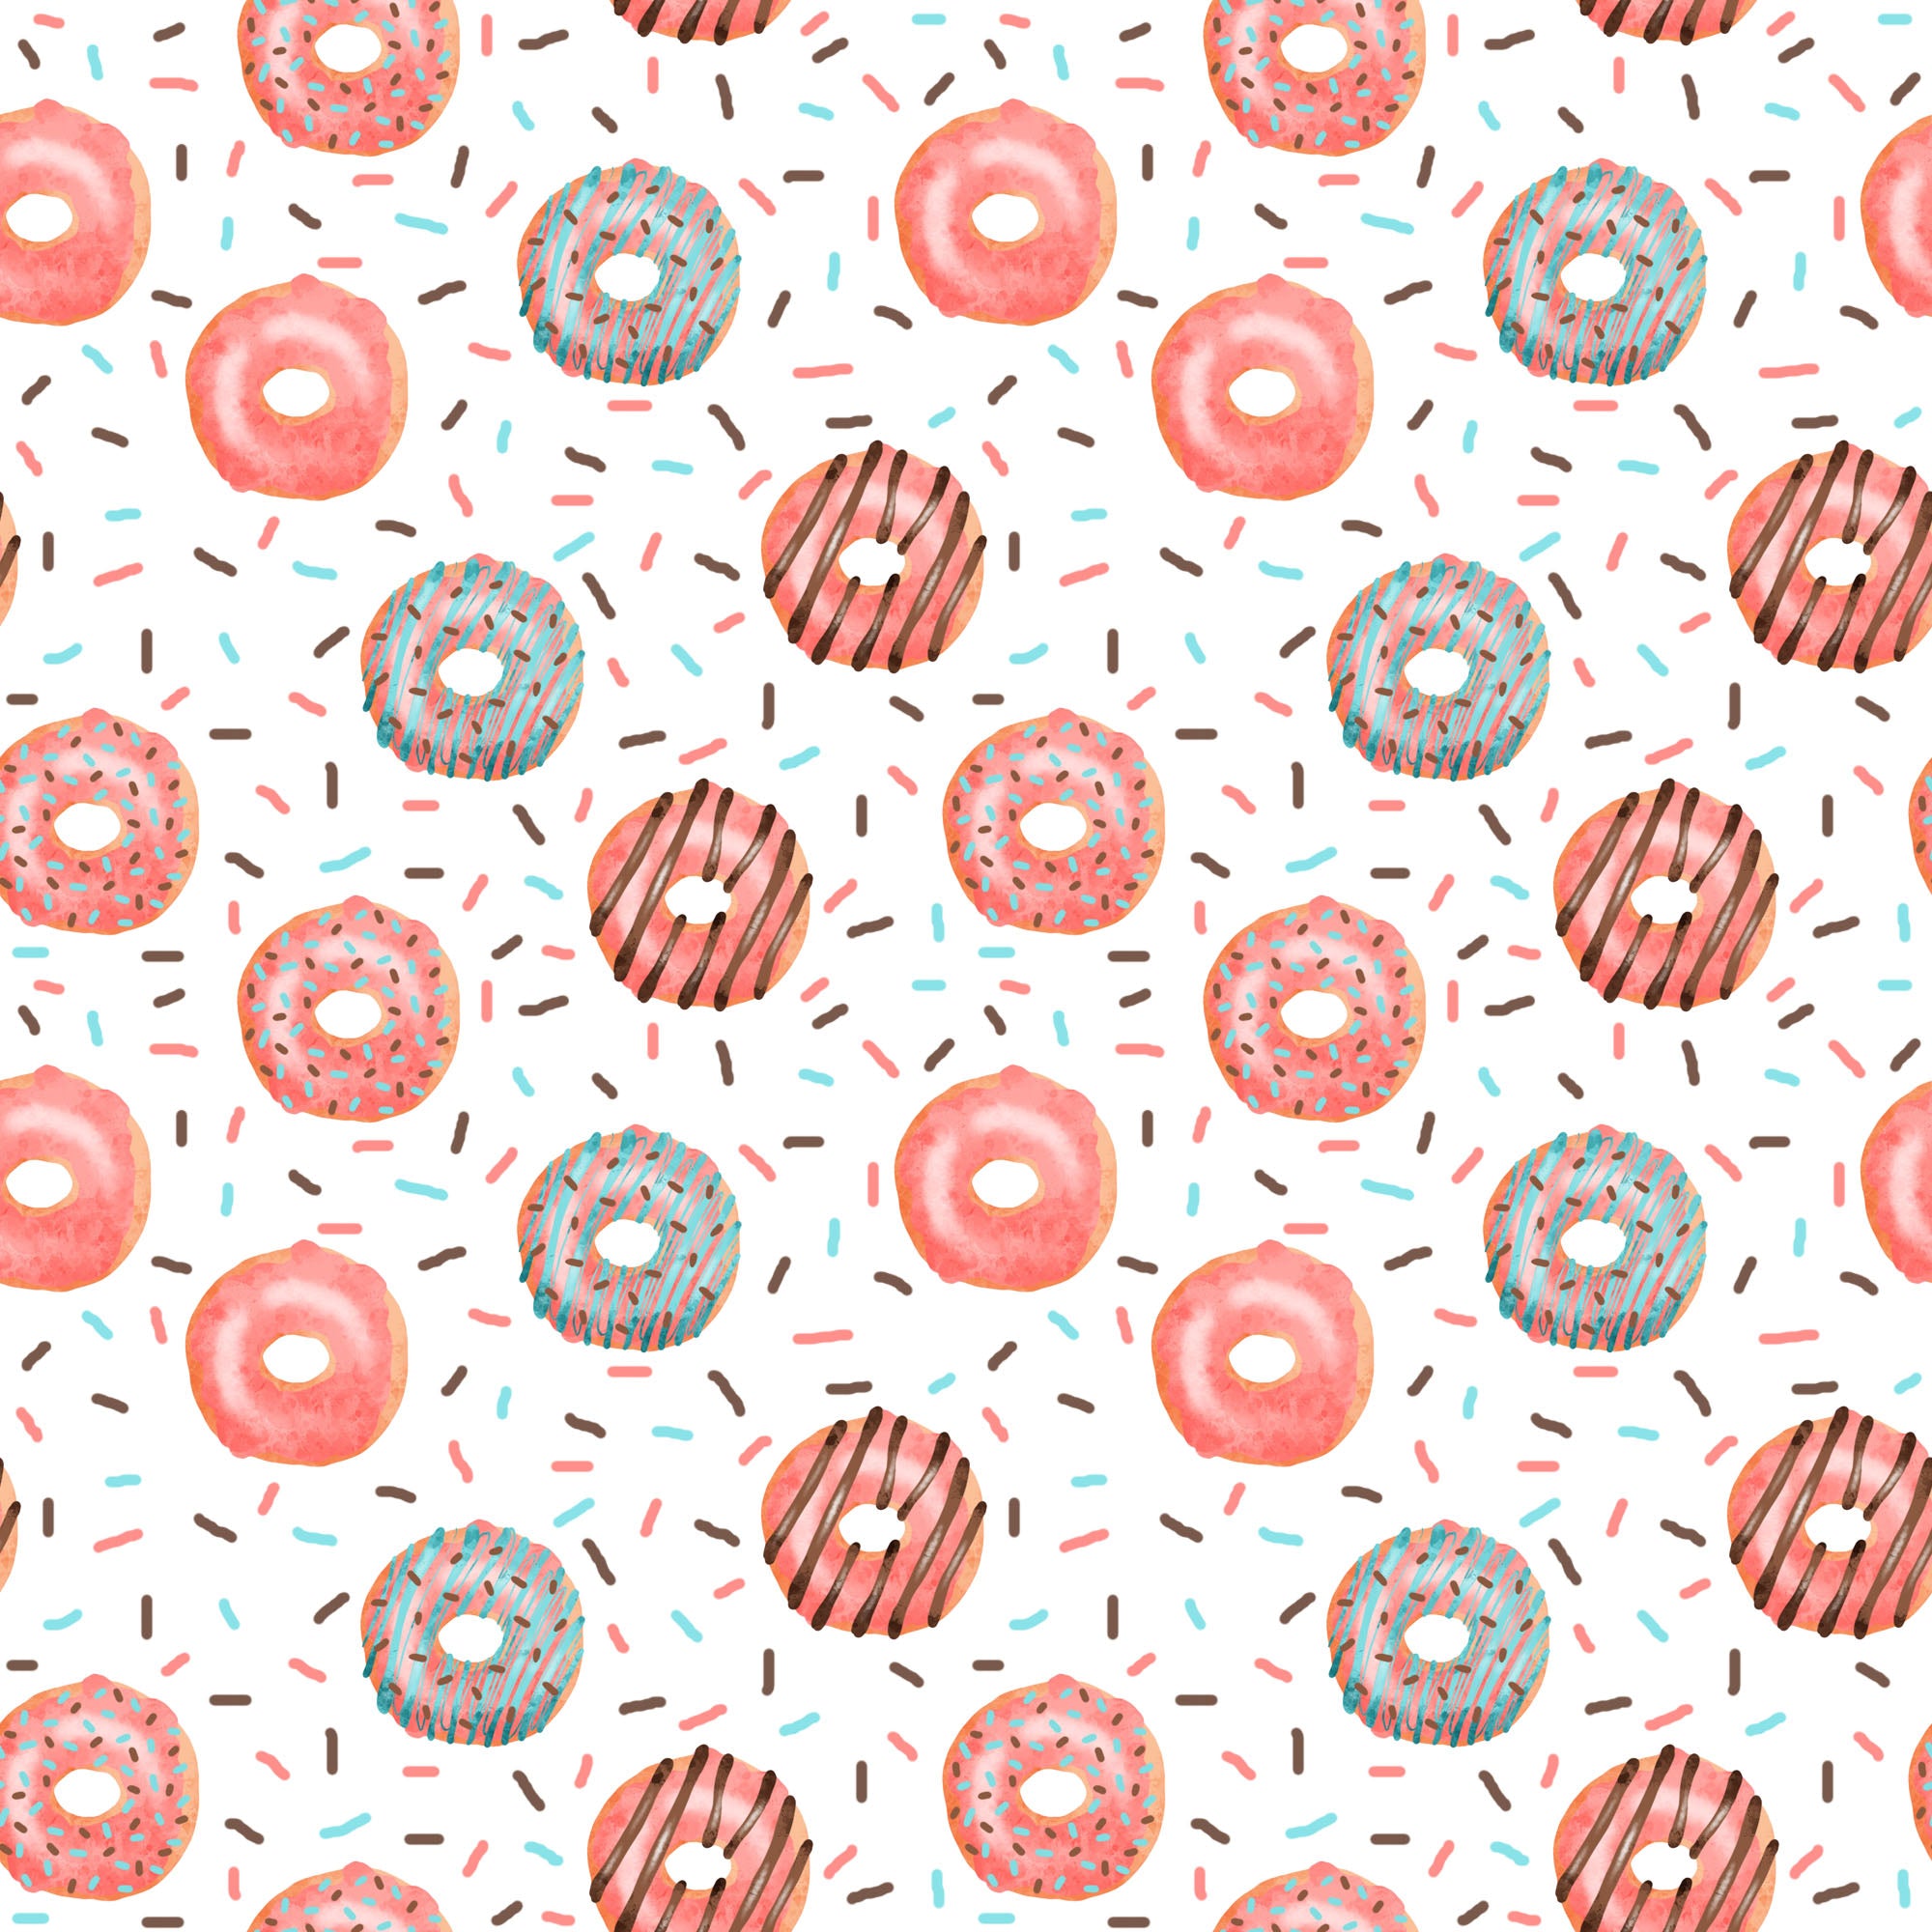 Donut seamless repeat design